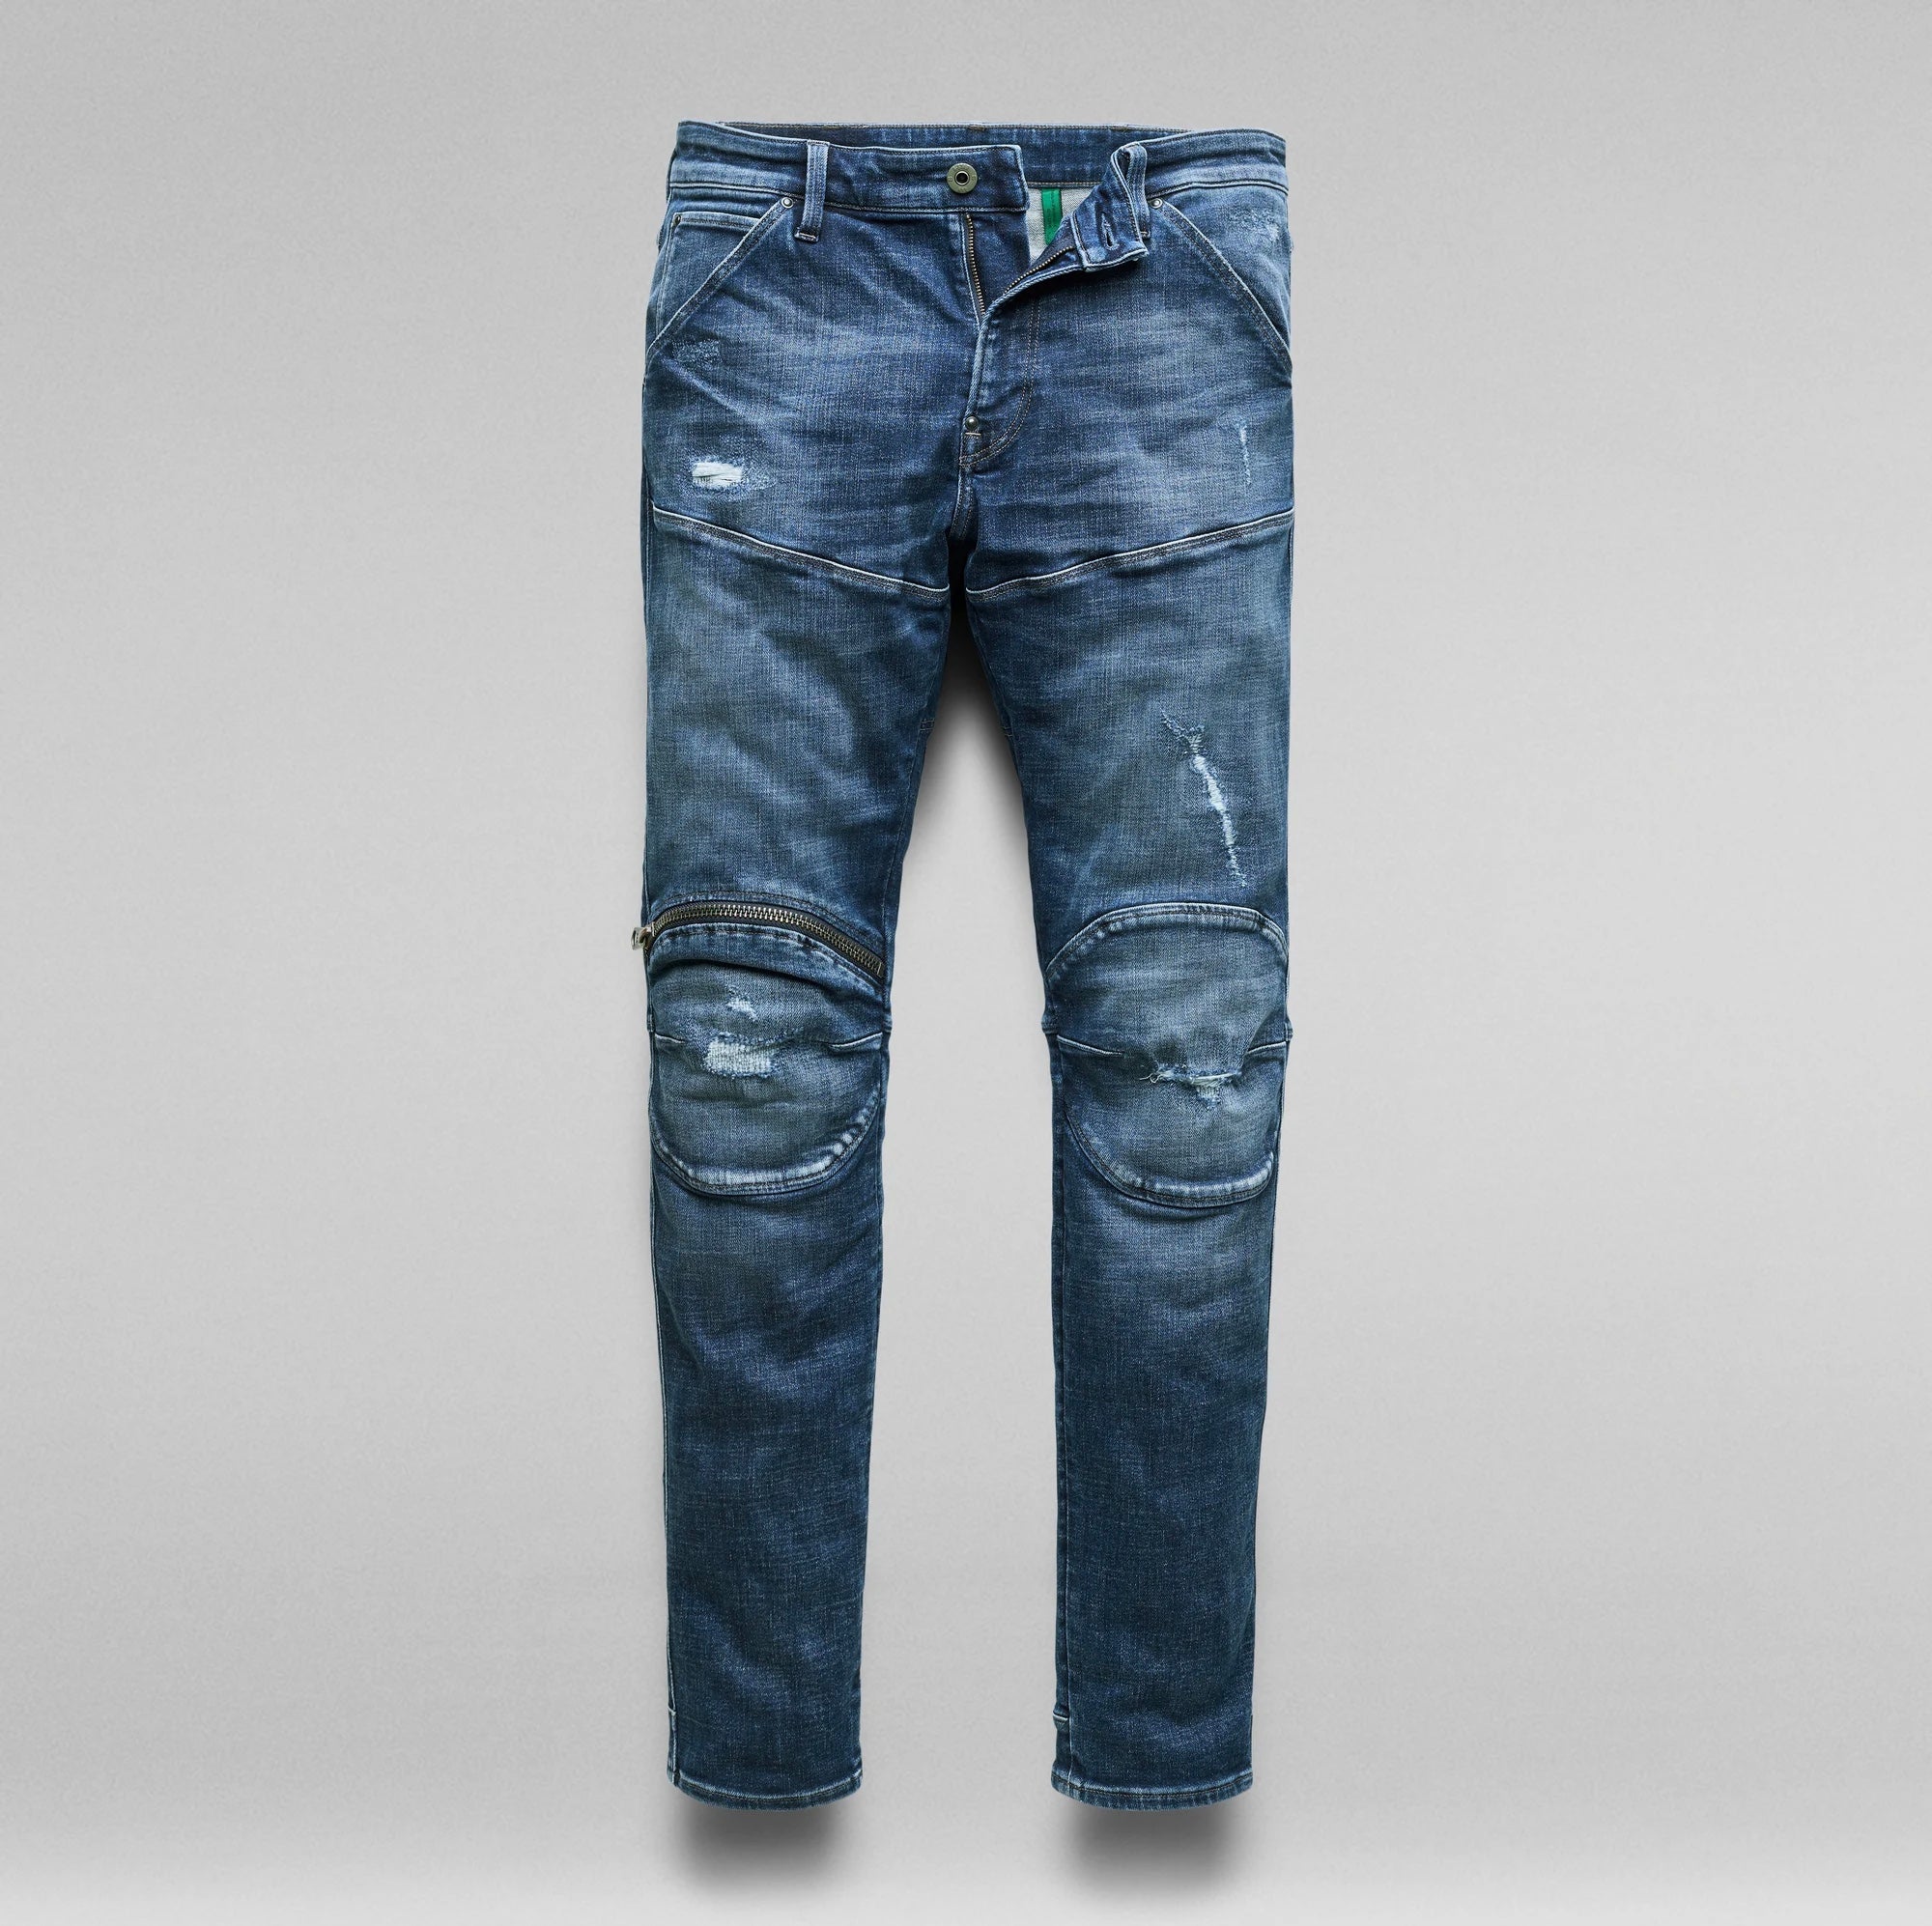 G-Star Elwood 5620 Regular Jeans, Multi color